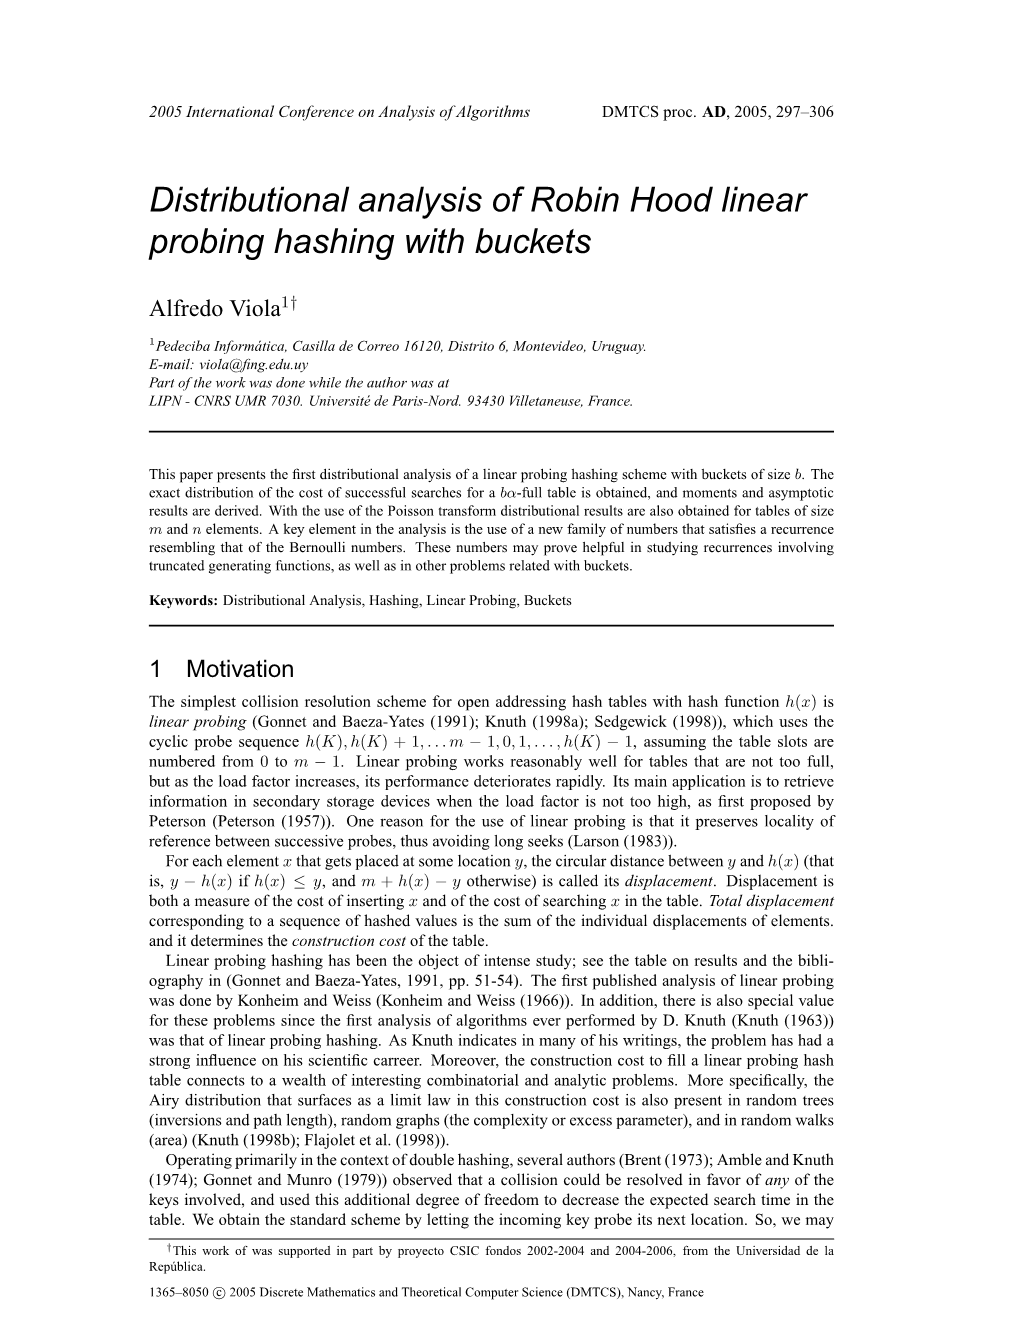 Distributional Analysis of Robin Hood Linear Probing Hashing with Buckets